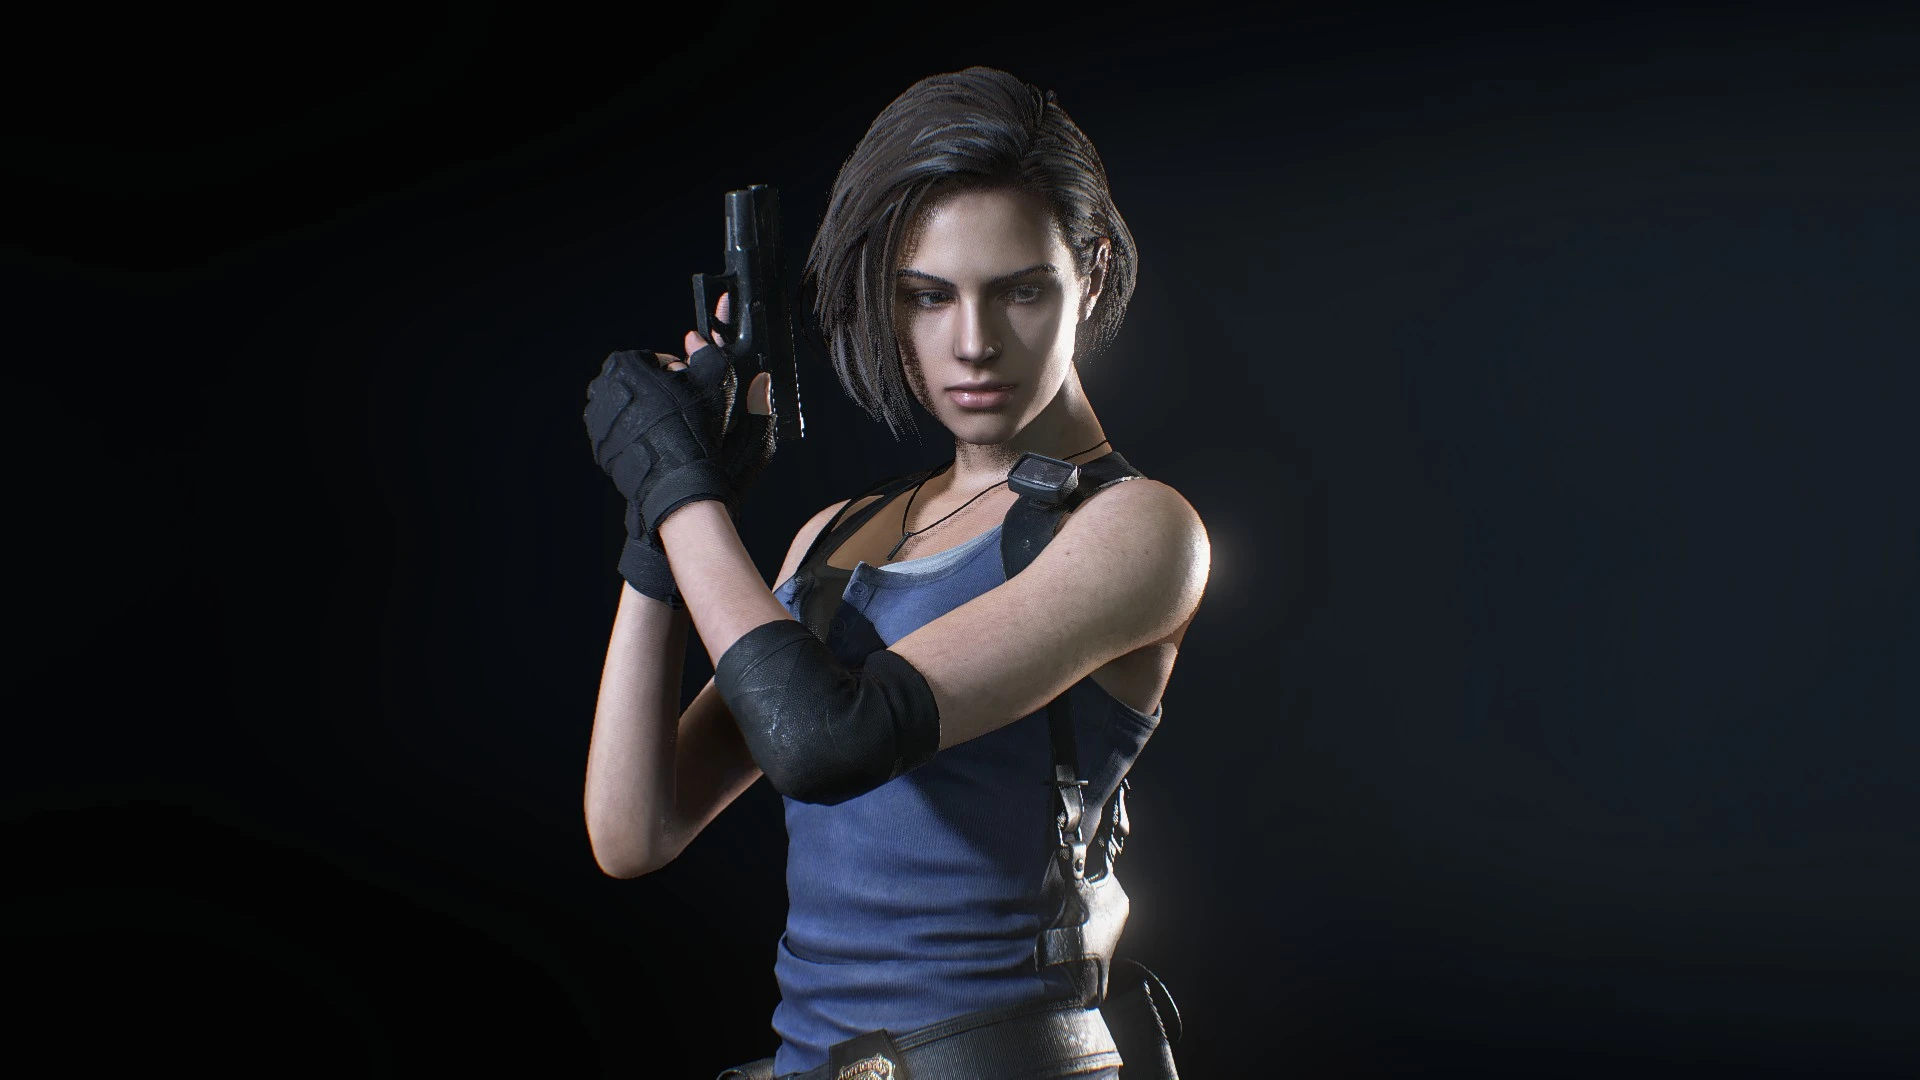 Jill Valentine/Julia Voth from Resident Evil 1 Remake - Request